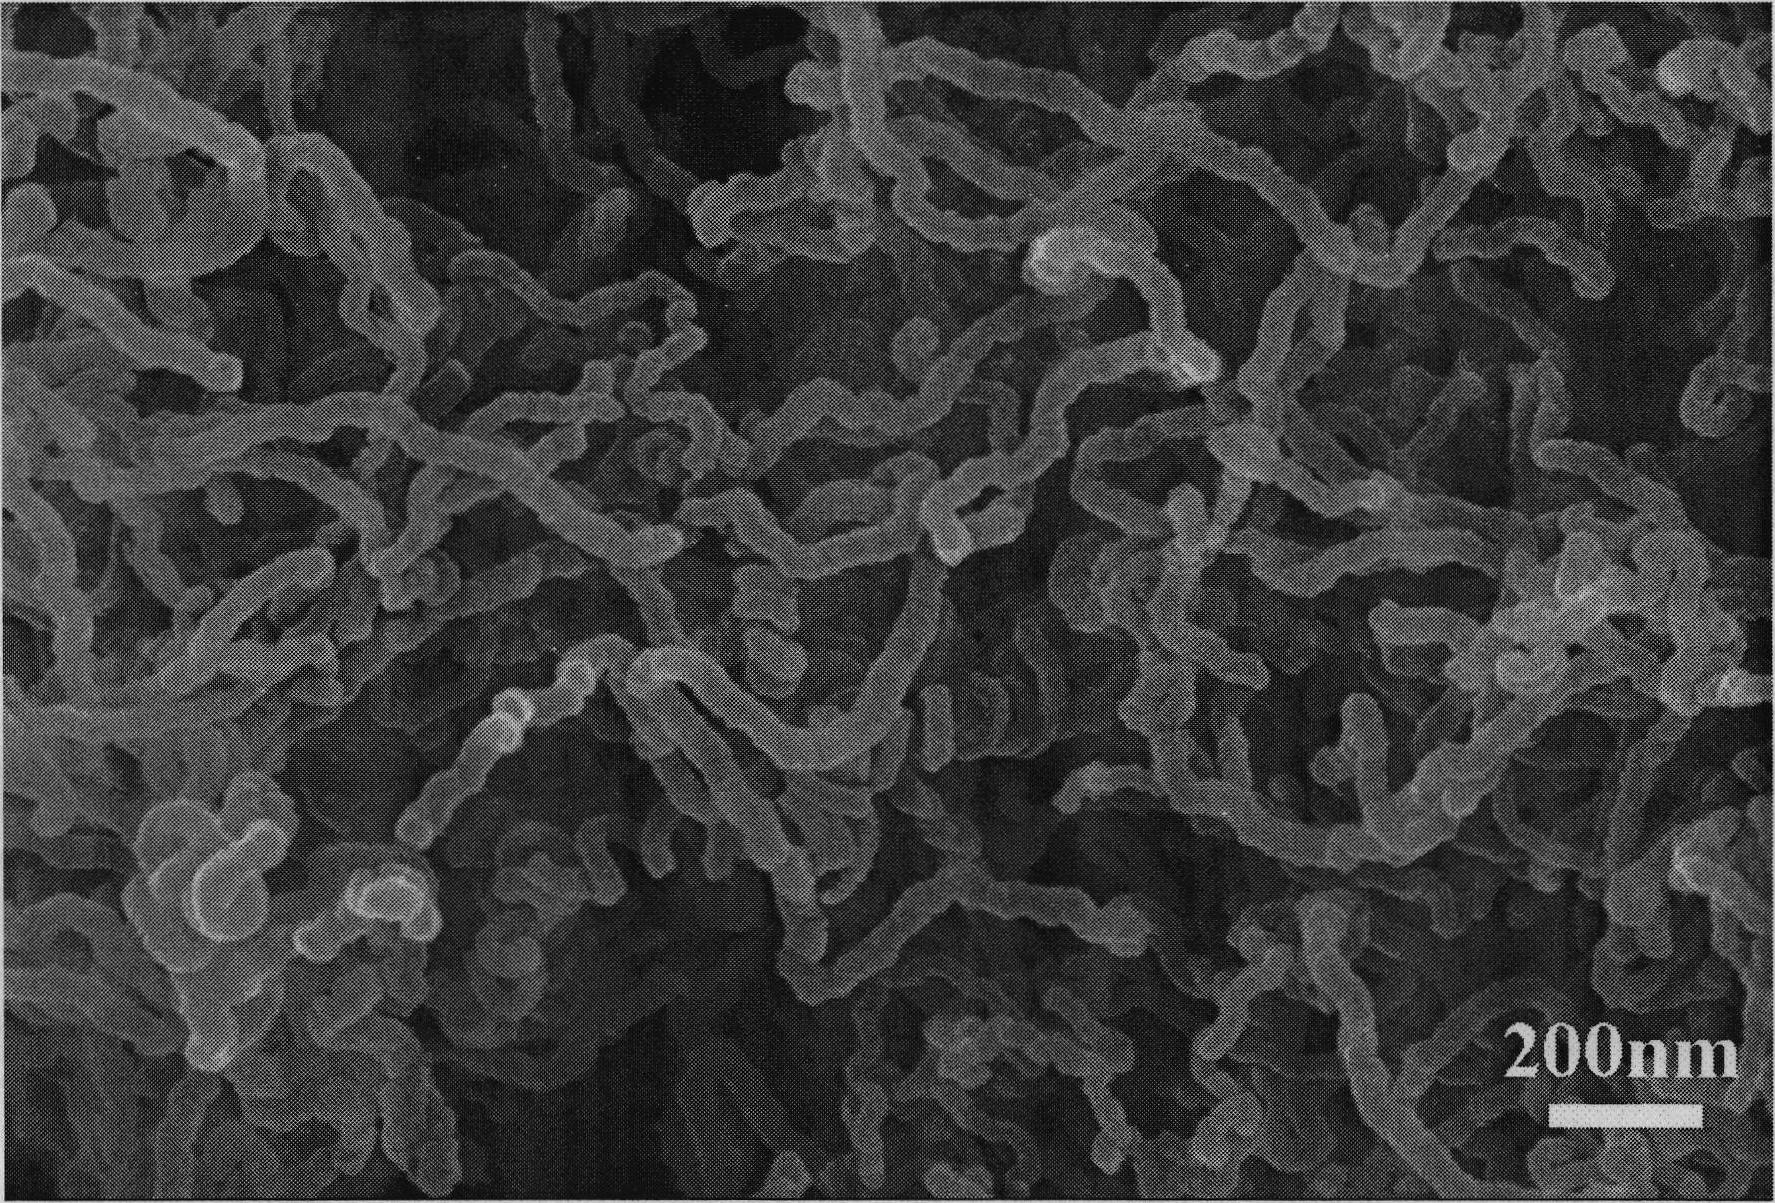 Stratiform bimetal hydroxide for growing carbon nano-fibers and preparation method thereof